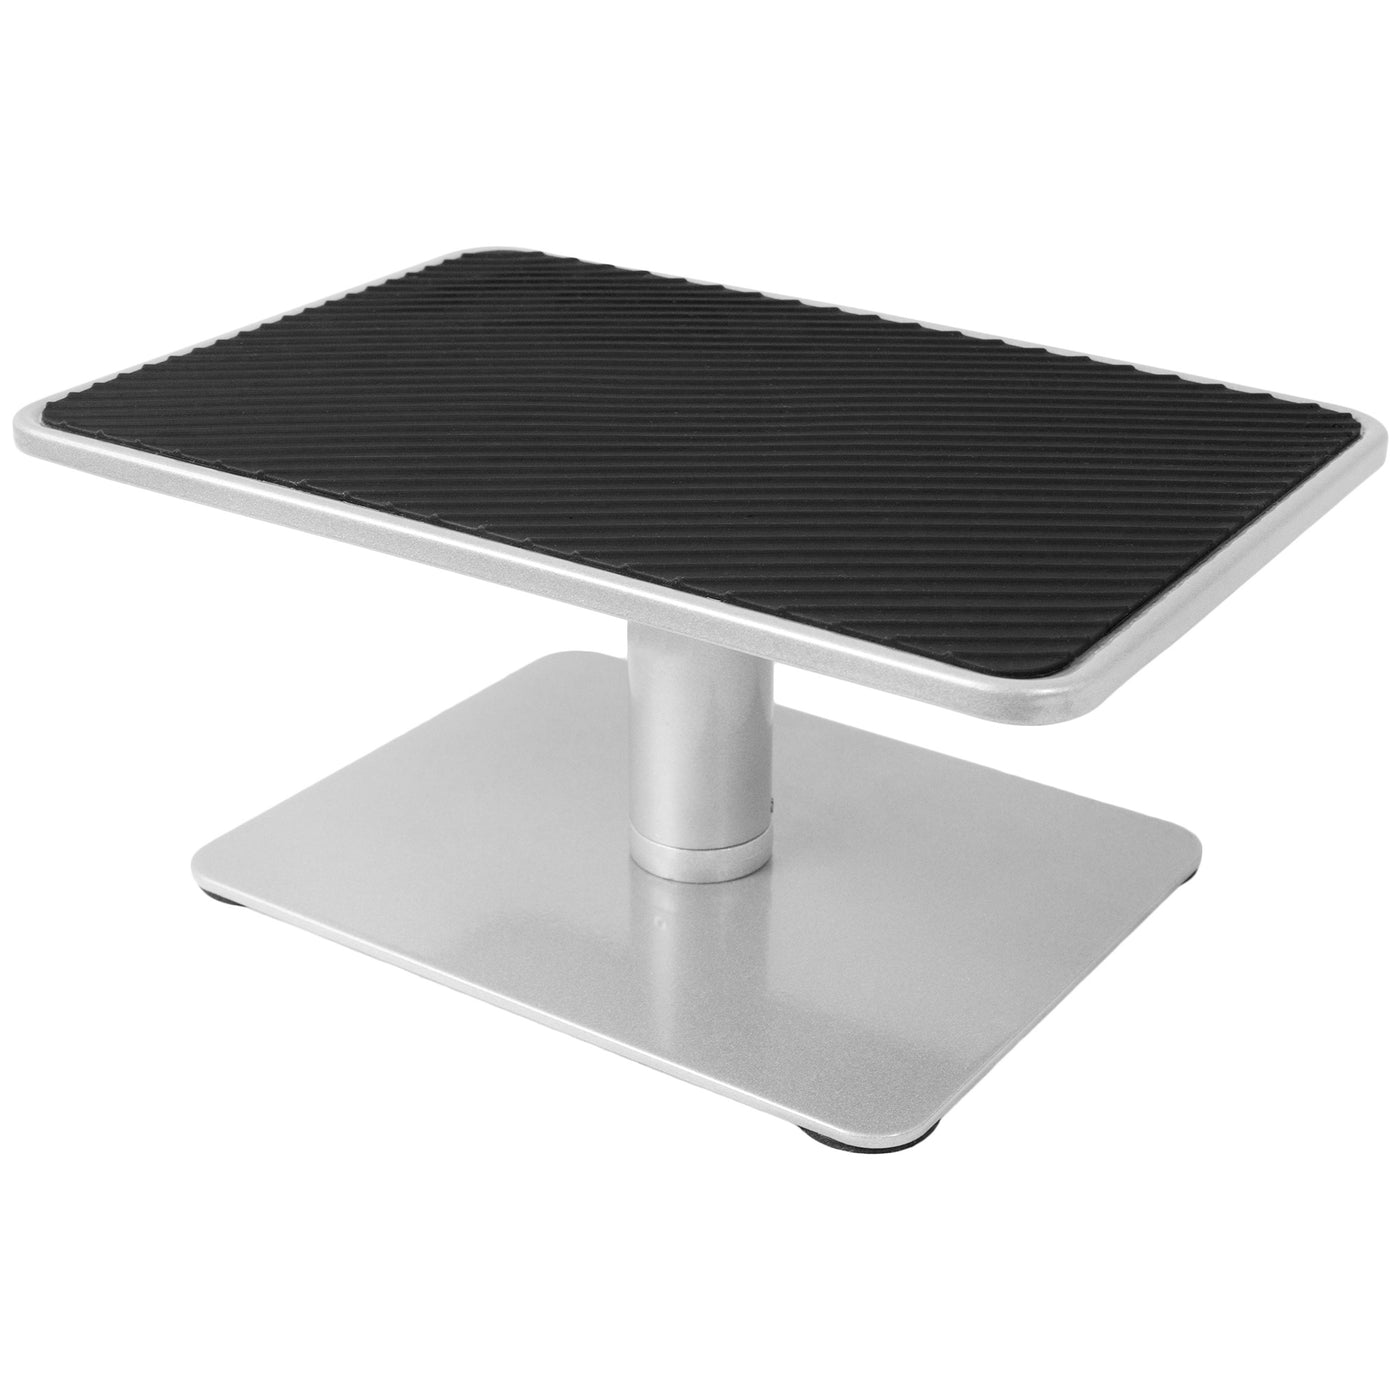 Clamp on desk mount laptop riser.